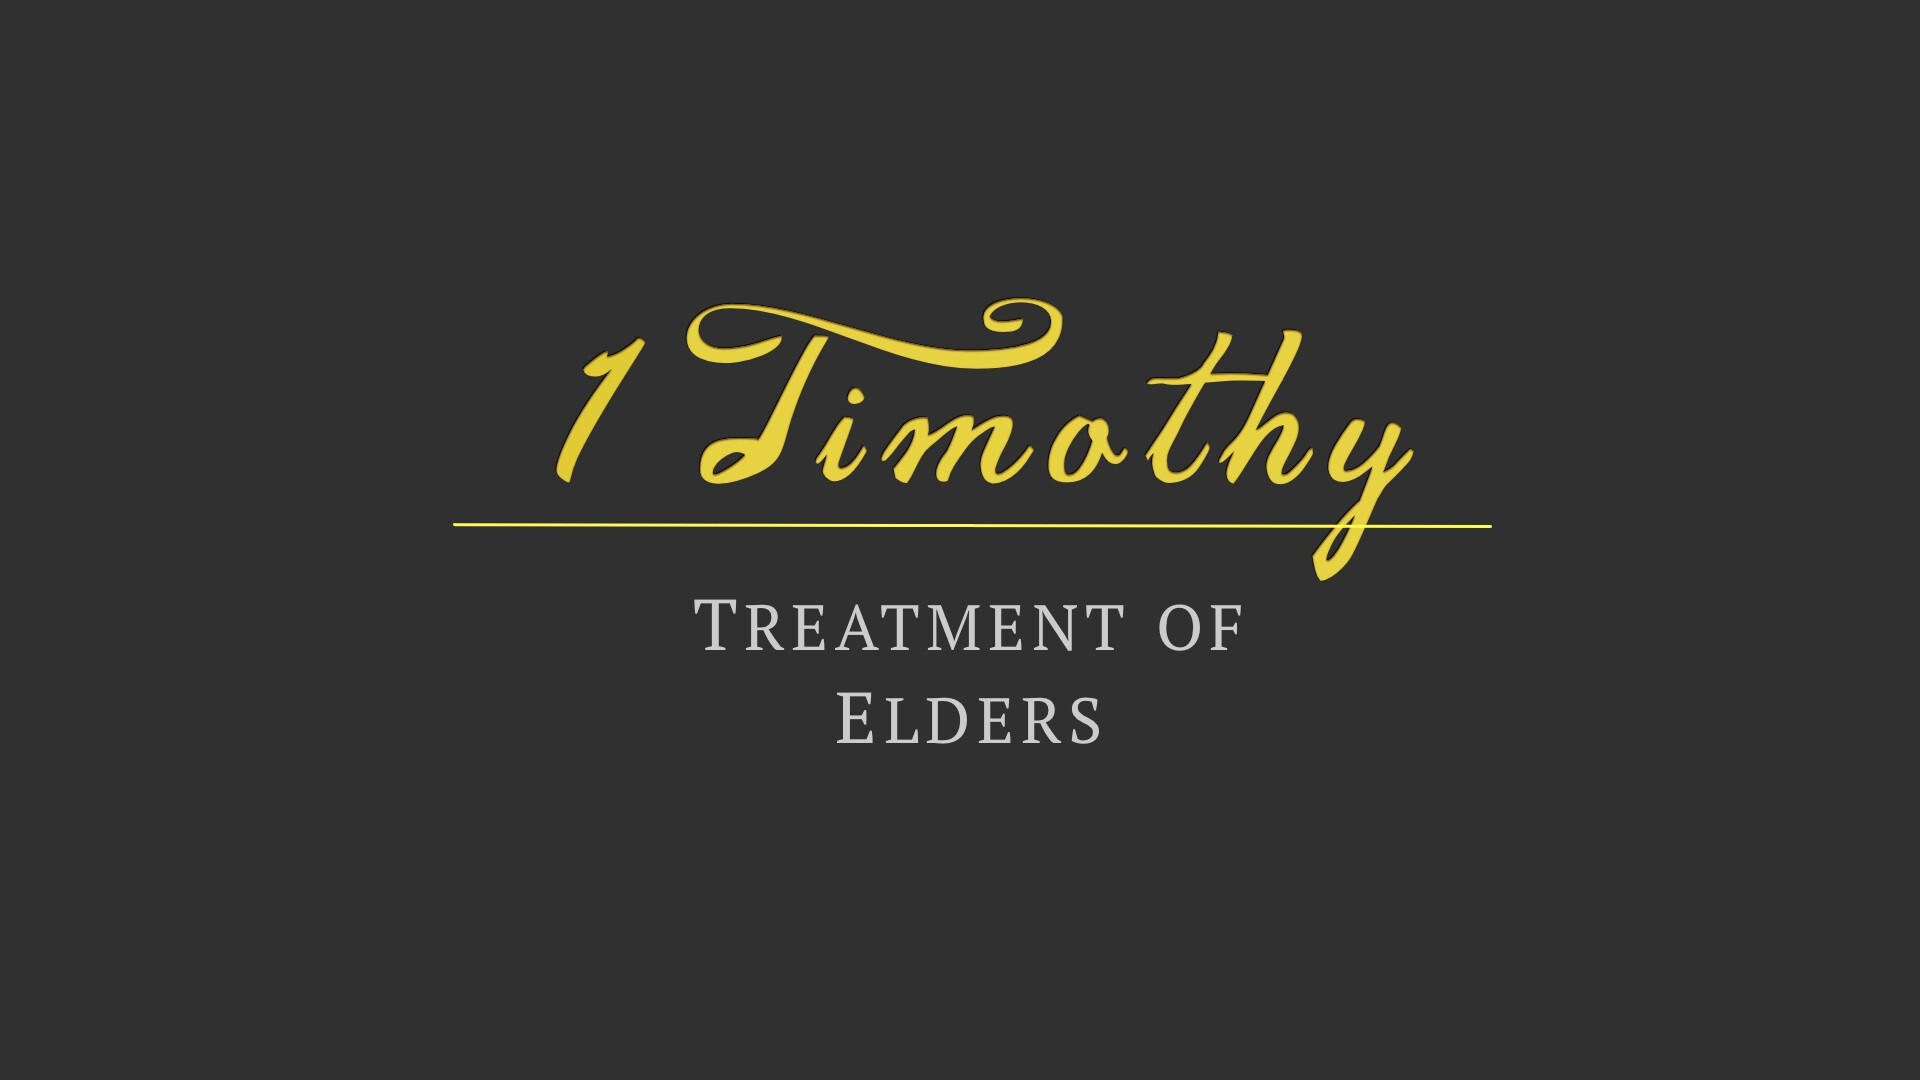 Treatment of Elders